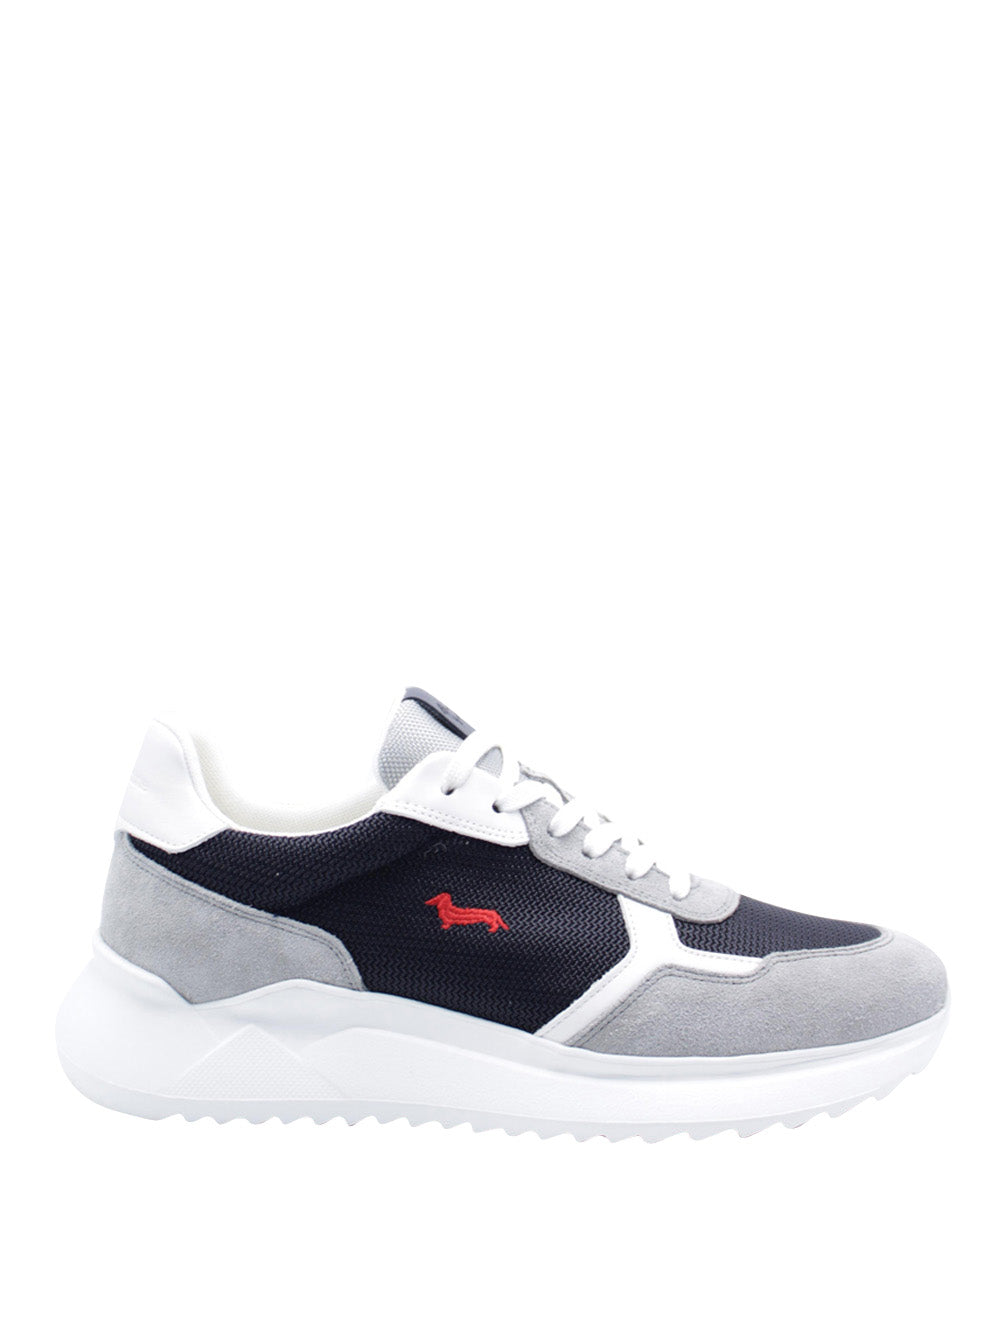 HARMONT&BLAINE Sneakers Uomo - Grigio modello EFM241.031.6230